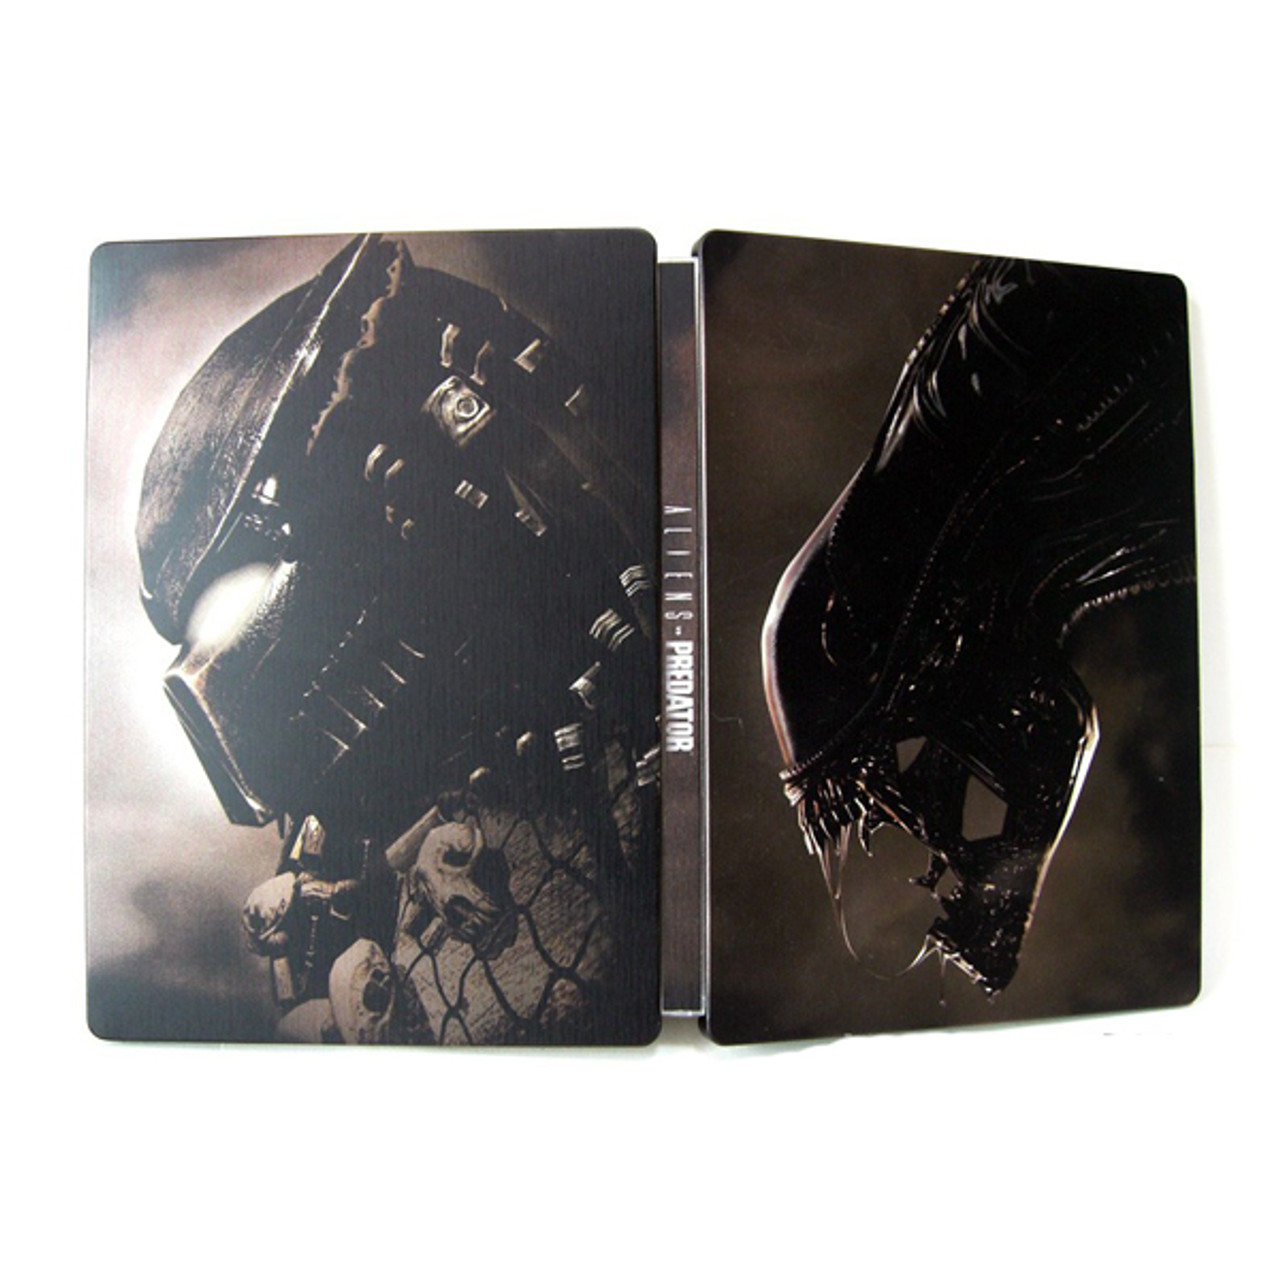 Alien versus Predator Xbox 360 Box Art Cover by walls83